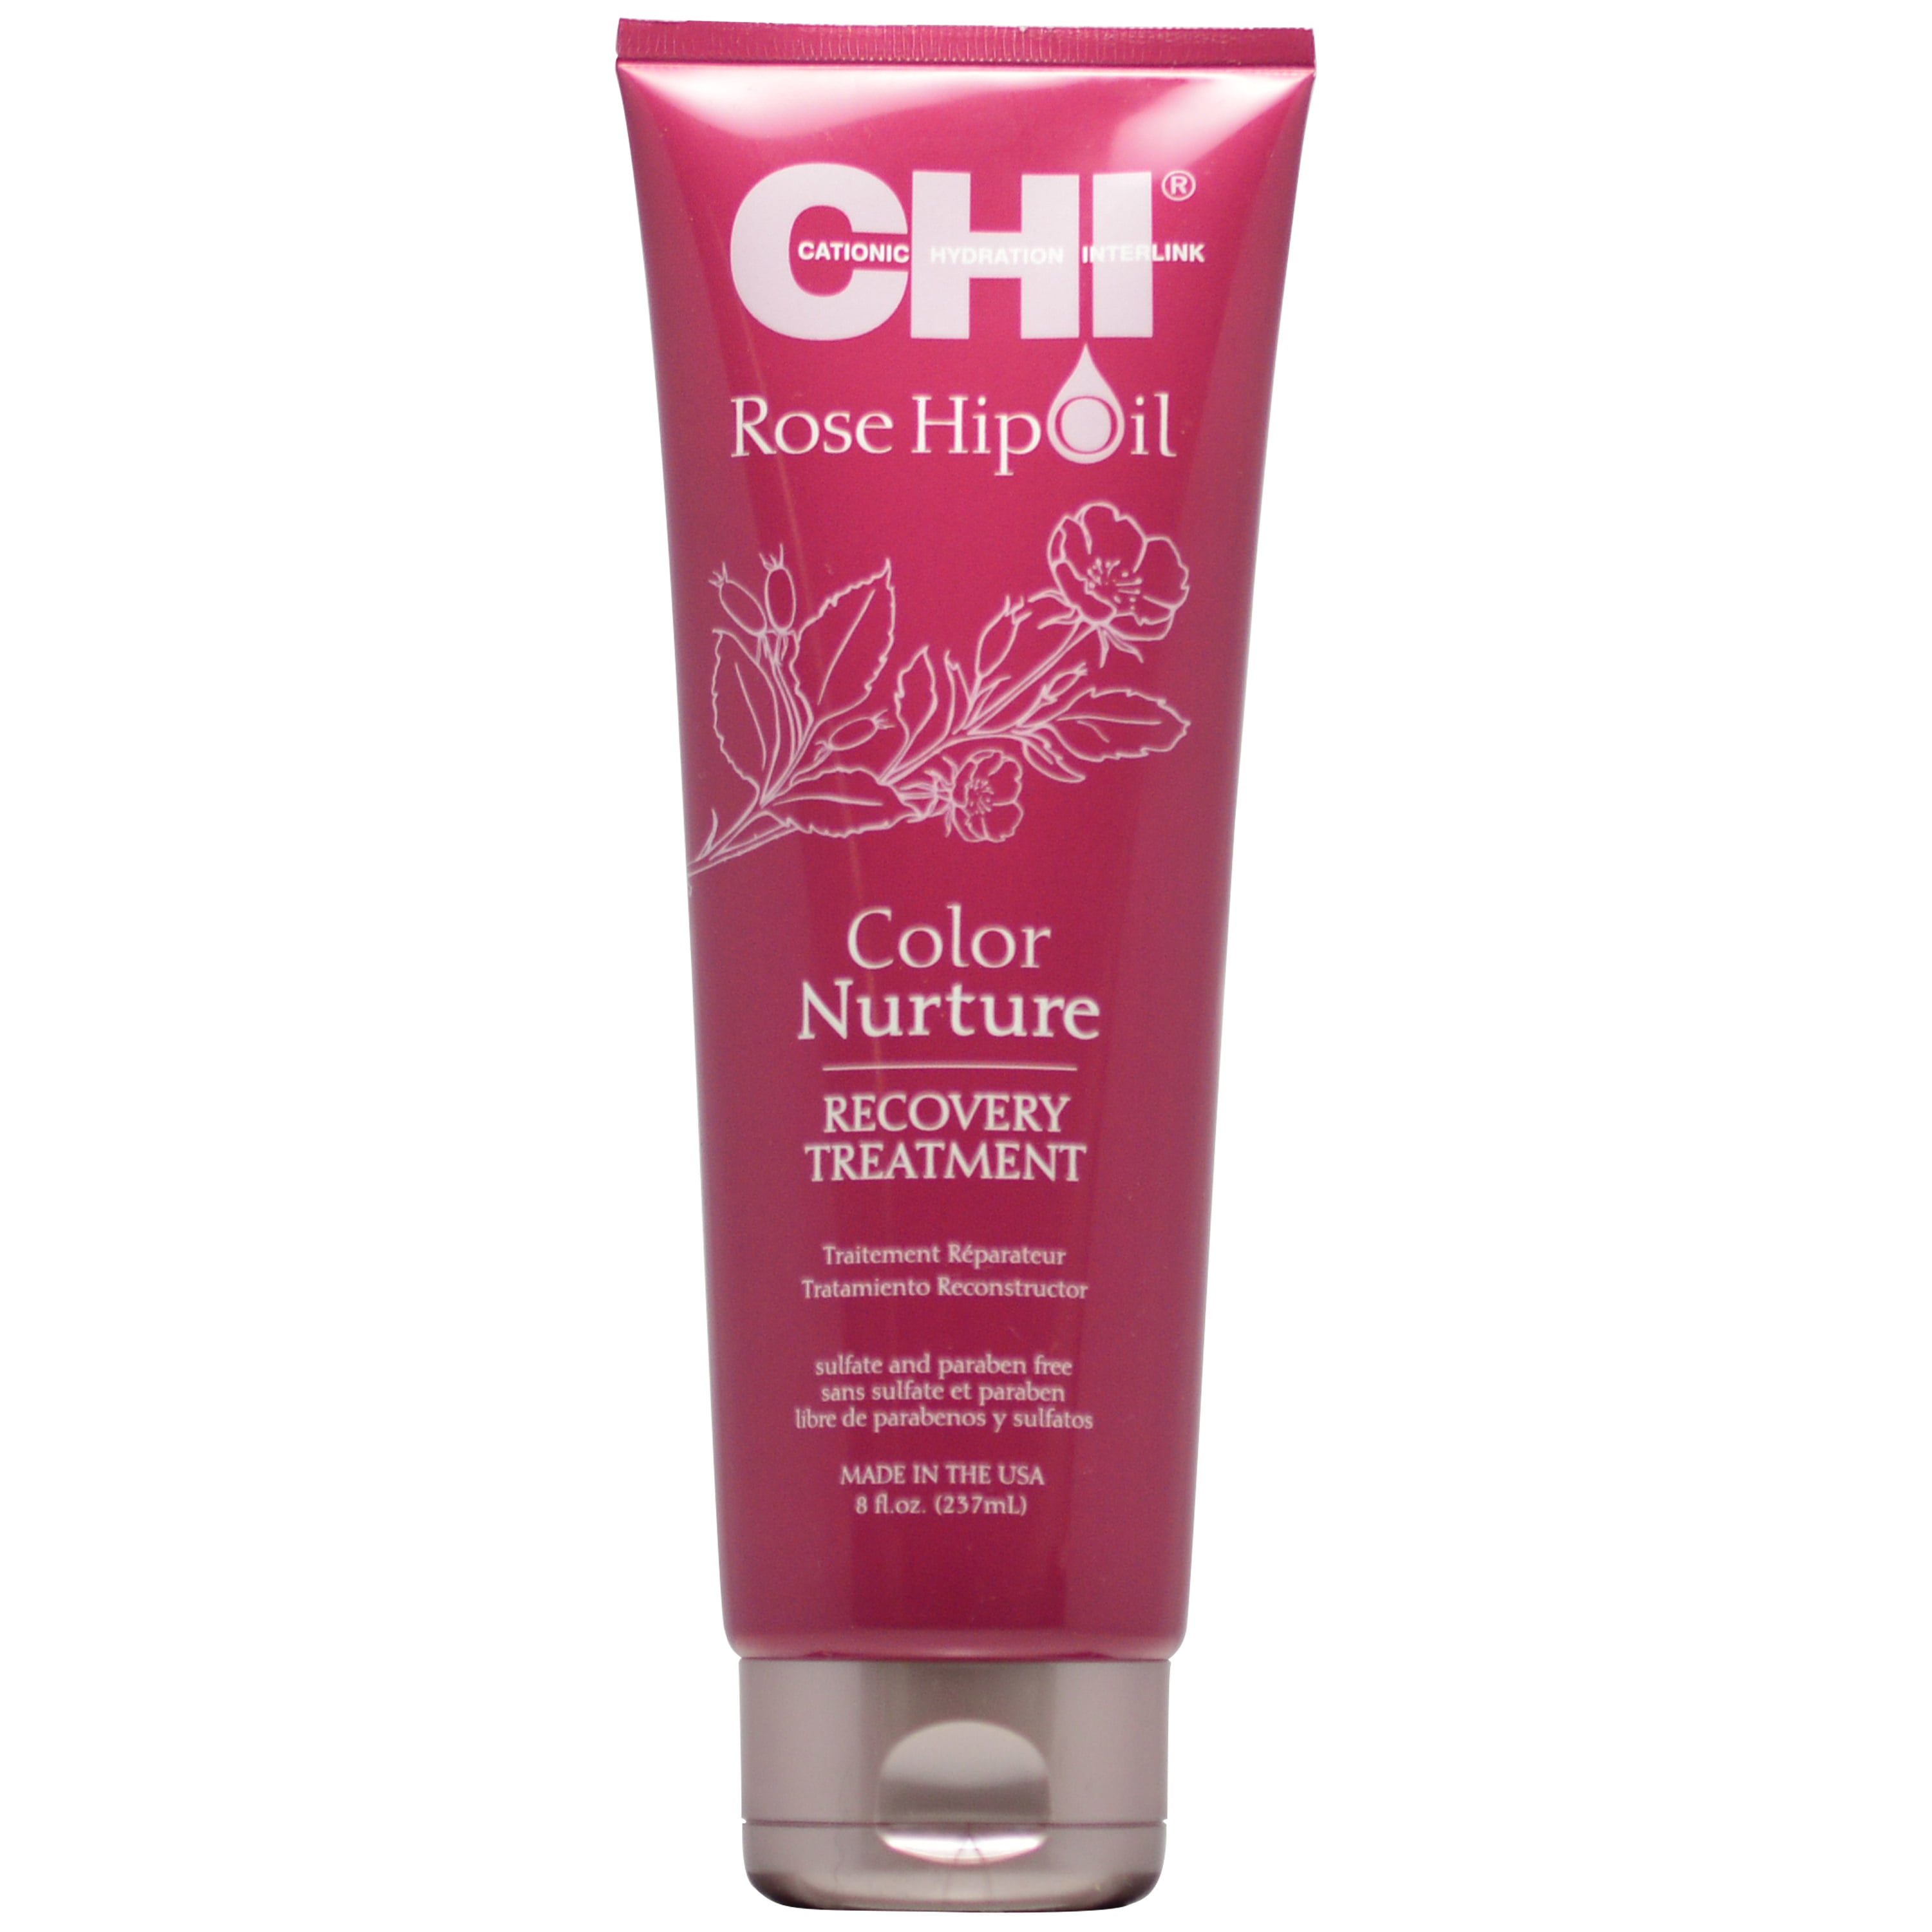 CHI Rose Hip Oil Color Nurture Recovery Treatment, 8 fl oz 